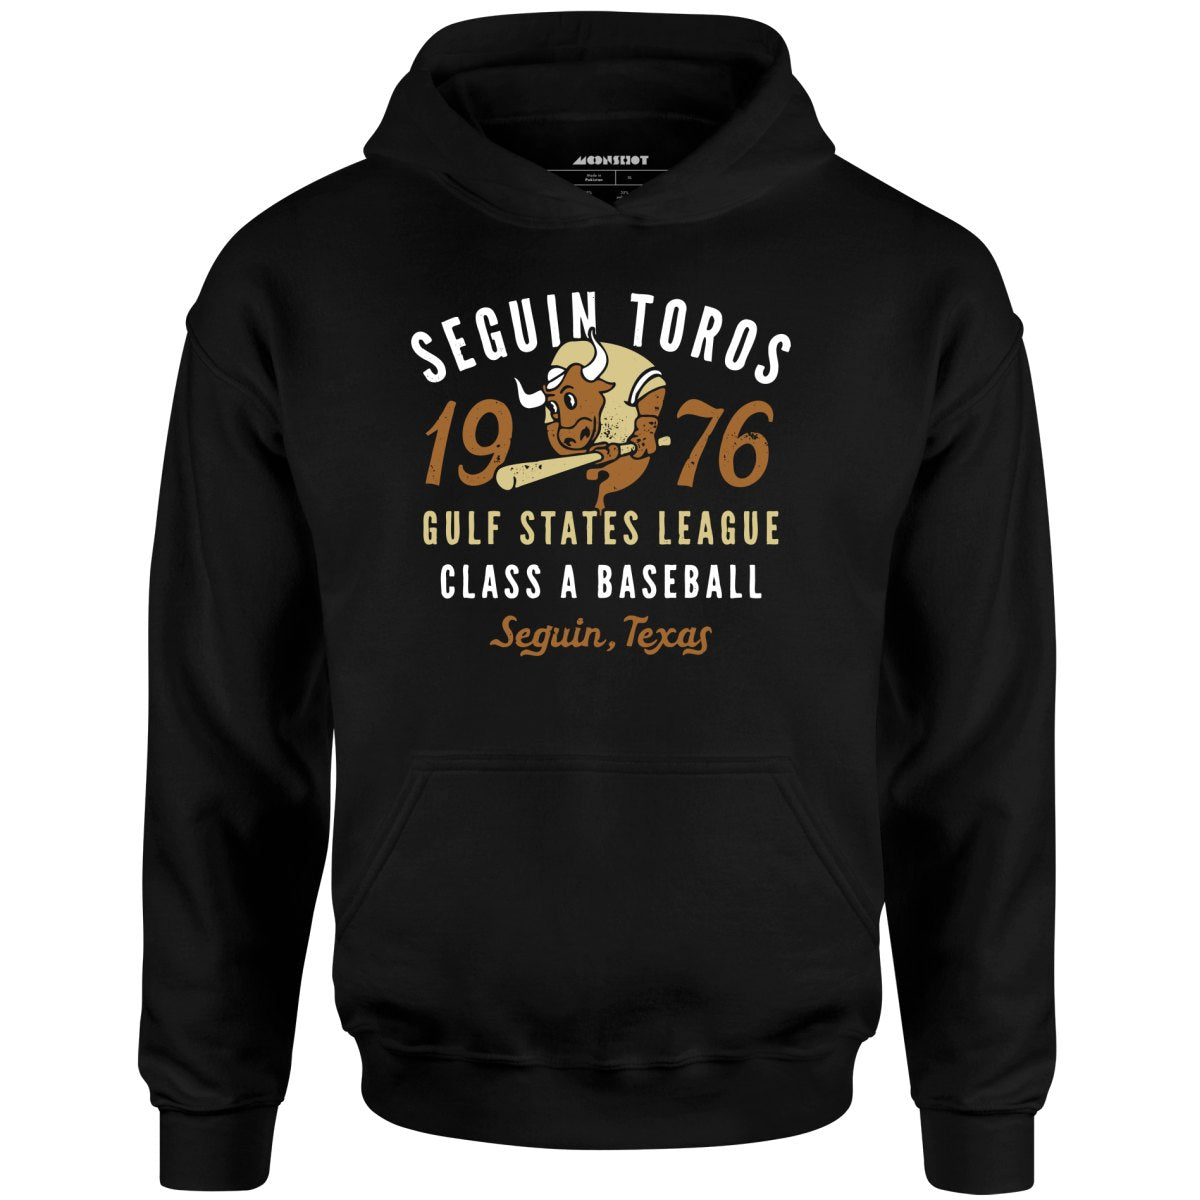 Seguin Toros - Texas - Vintage Defunct Baseball Teams - Unisex Hoodie